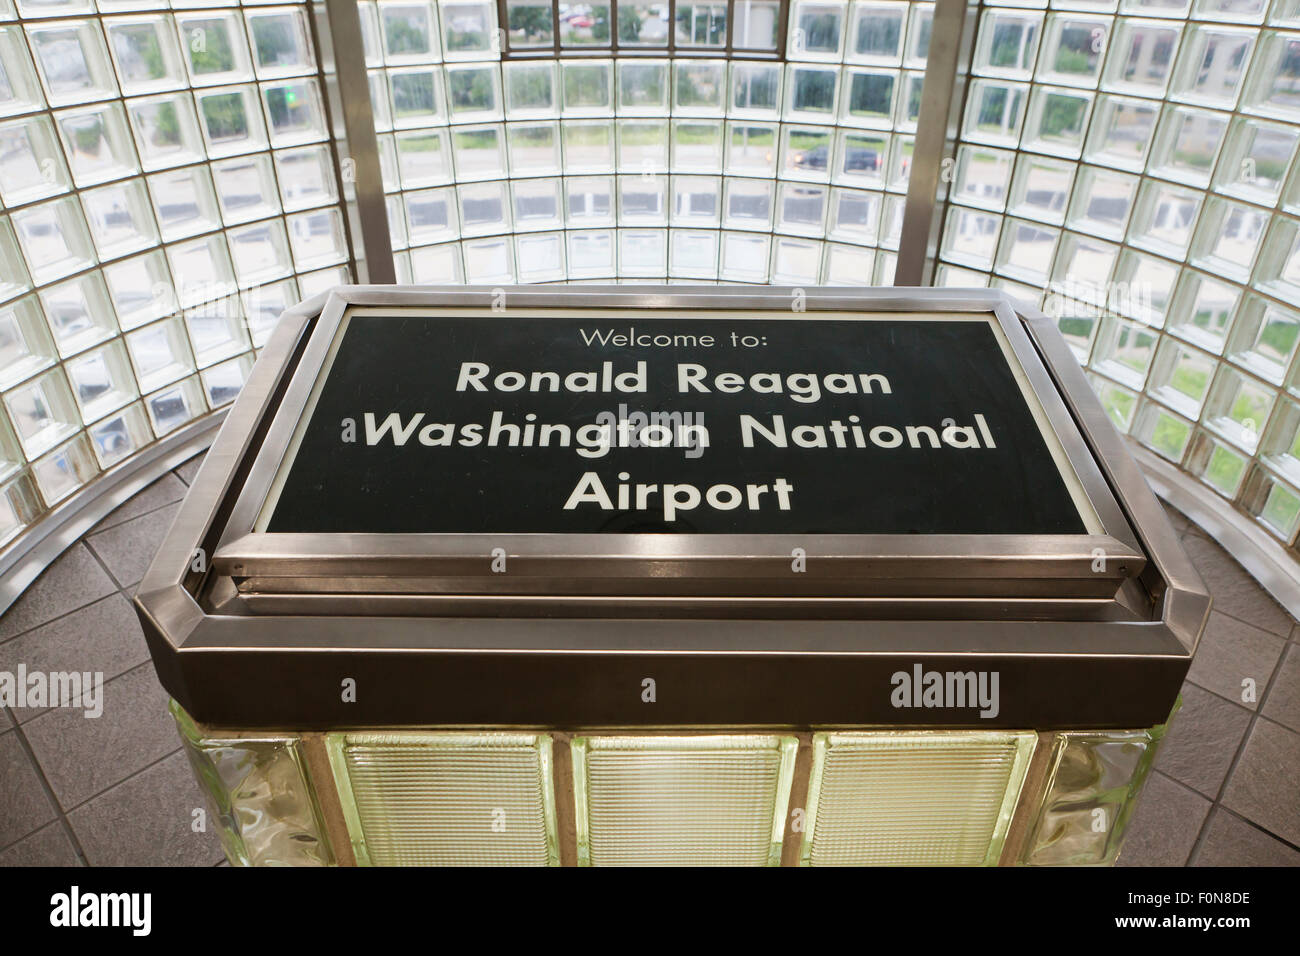 Ronald Reagan Washington National Airport sign - USA Stock Photo